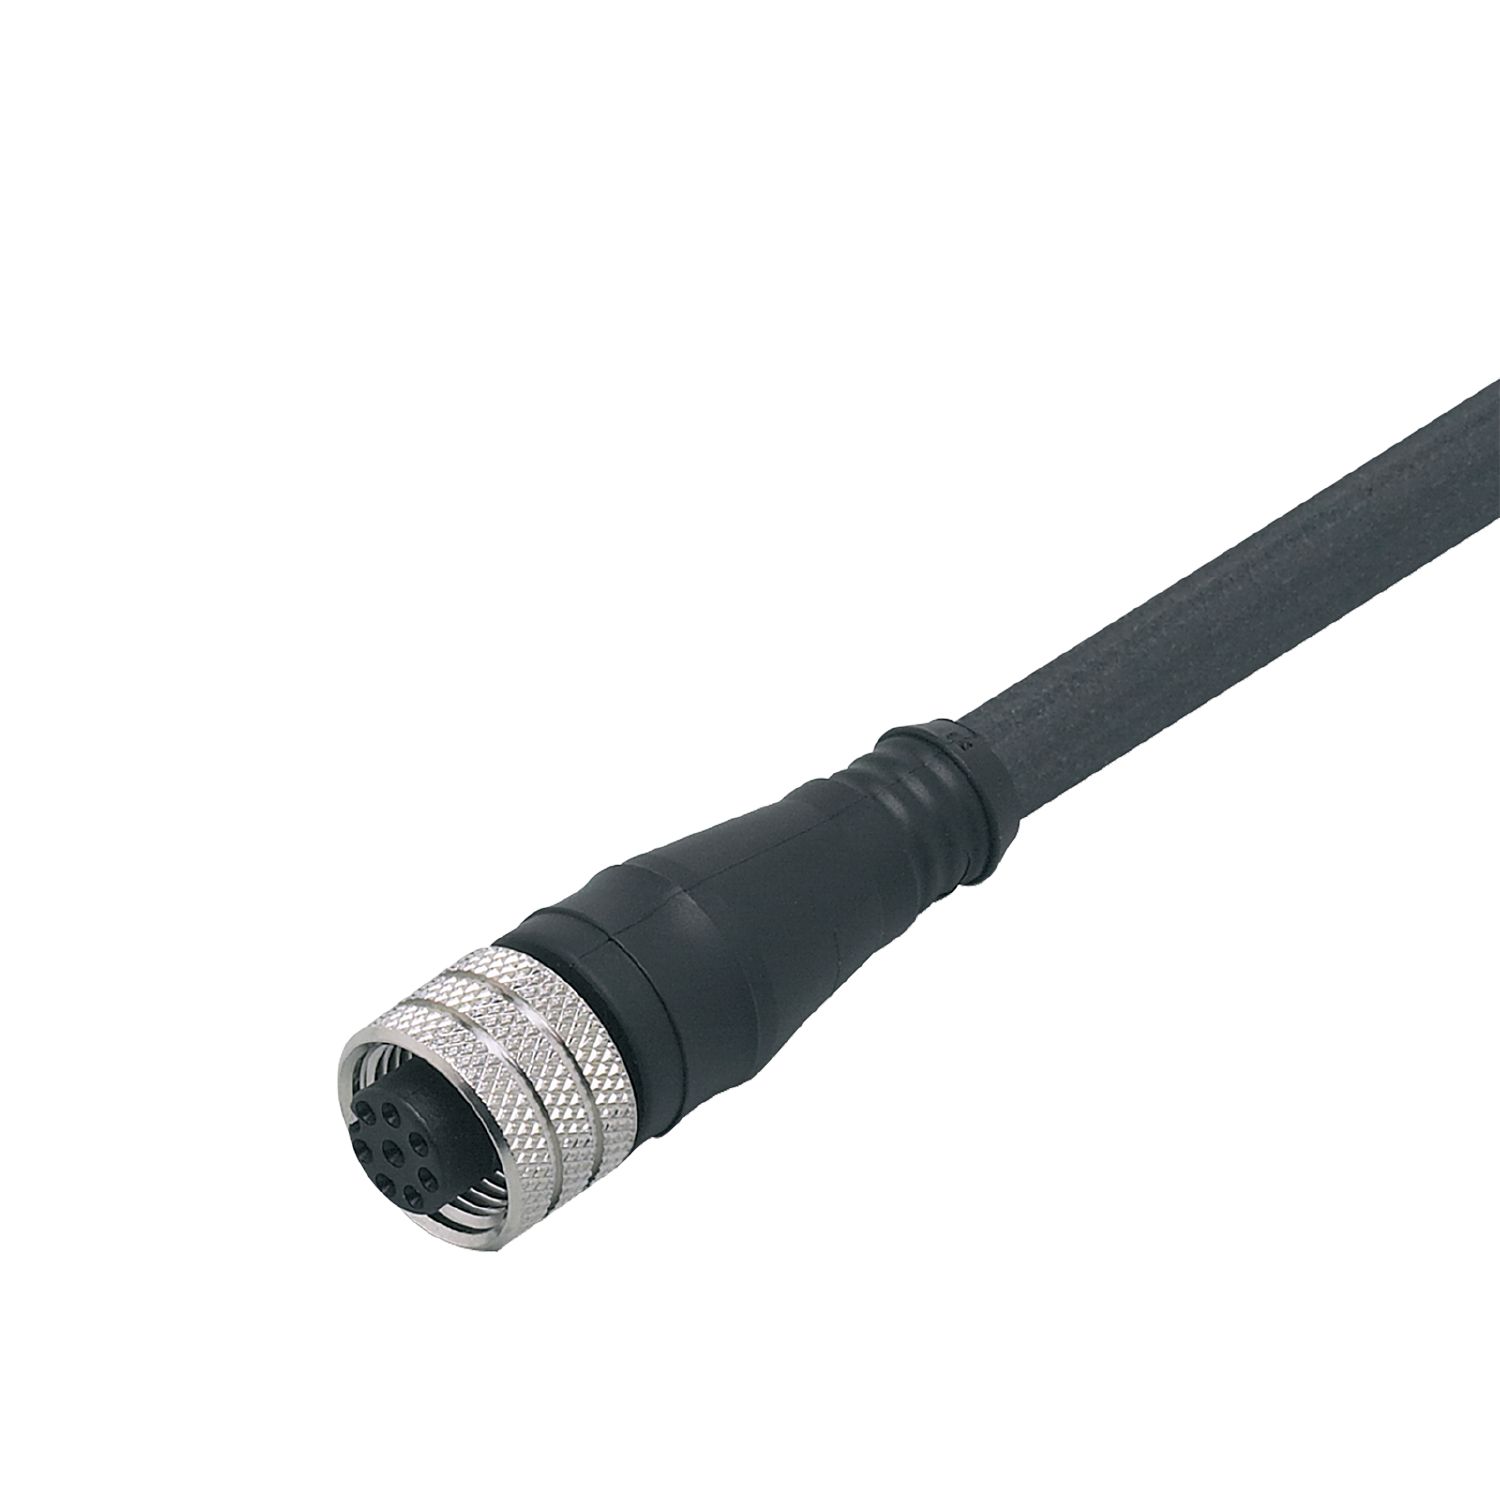 1310-1040-01, Encitech Connectors Einbaubuchse, IP64/67, M16, USB-C 3.1- Buchse - USB-C 3.1-Buchse